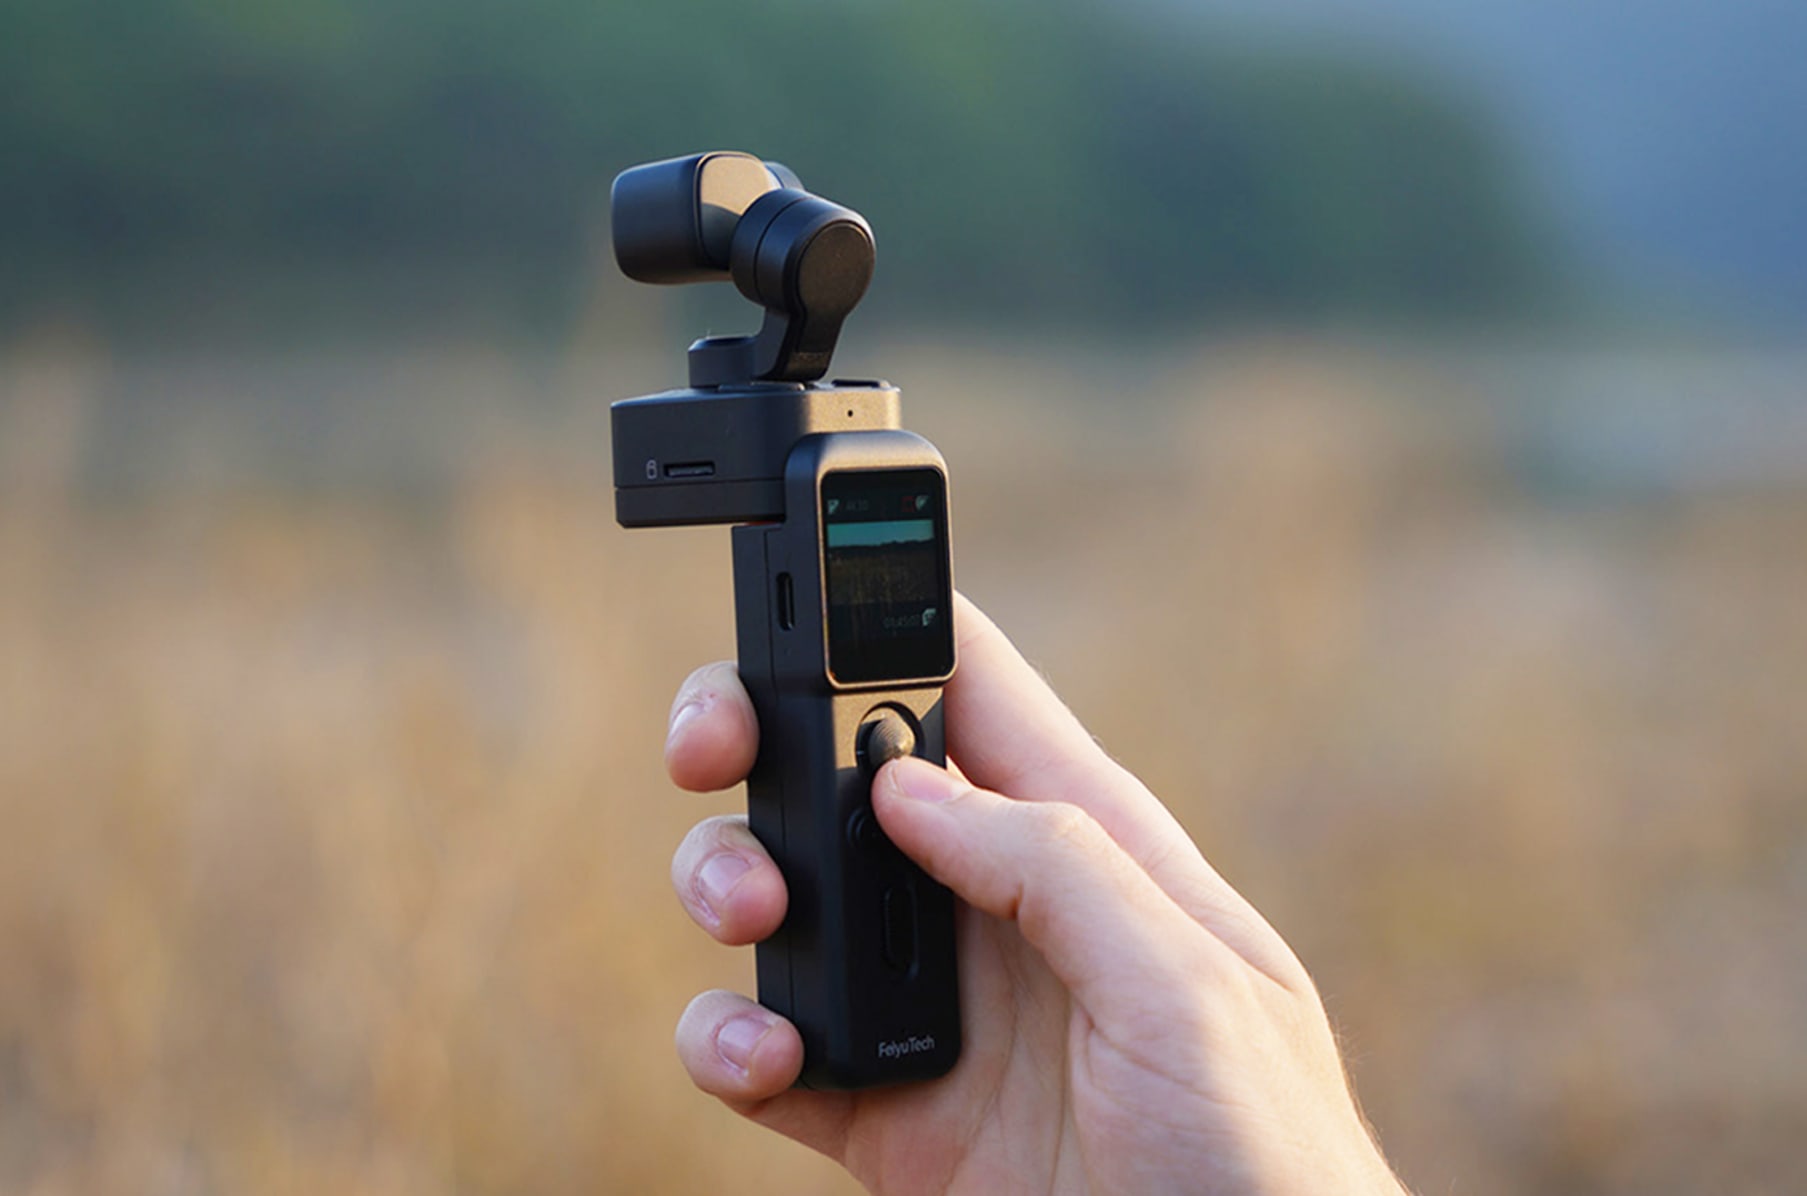 Feiyu Pocket 3: Cordless Detachable 3-Axis Gimbal Camera by FeiyuTech —  Kickstarter